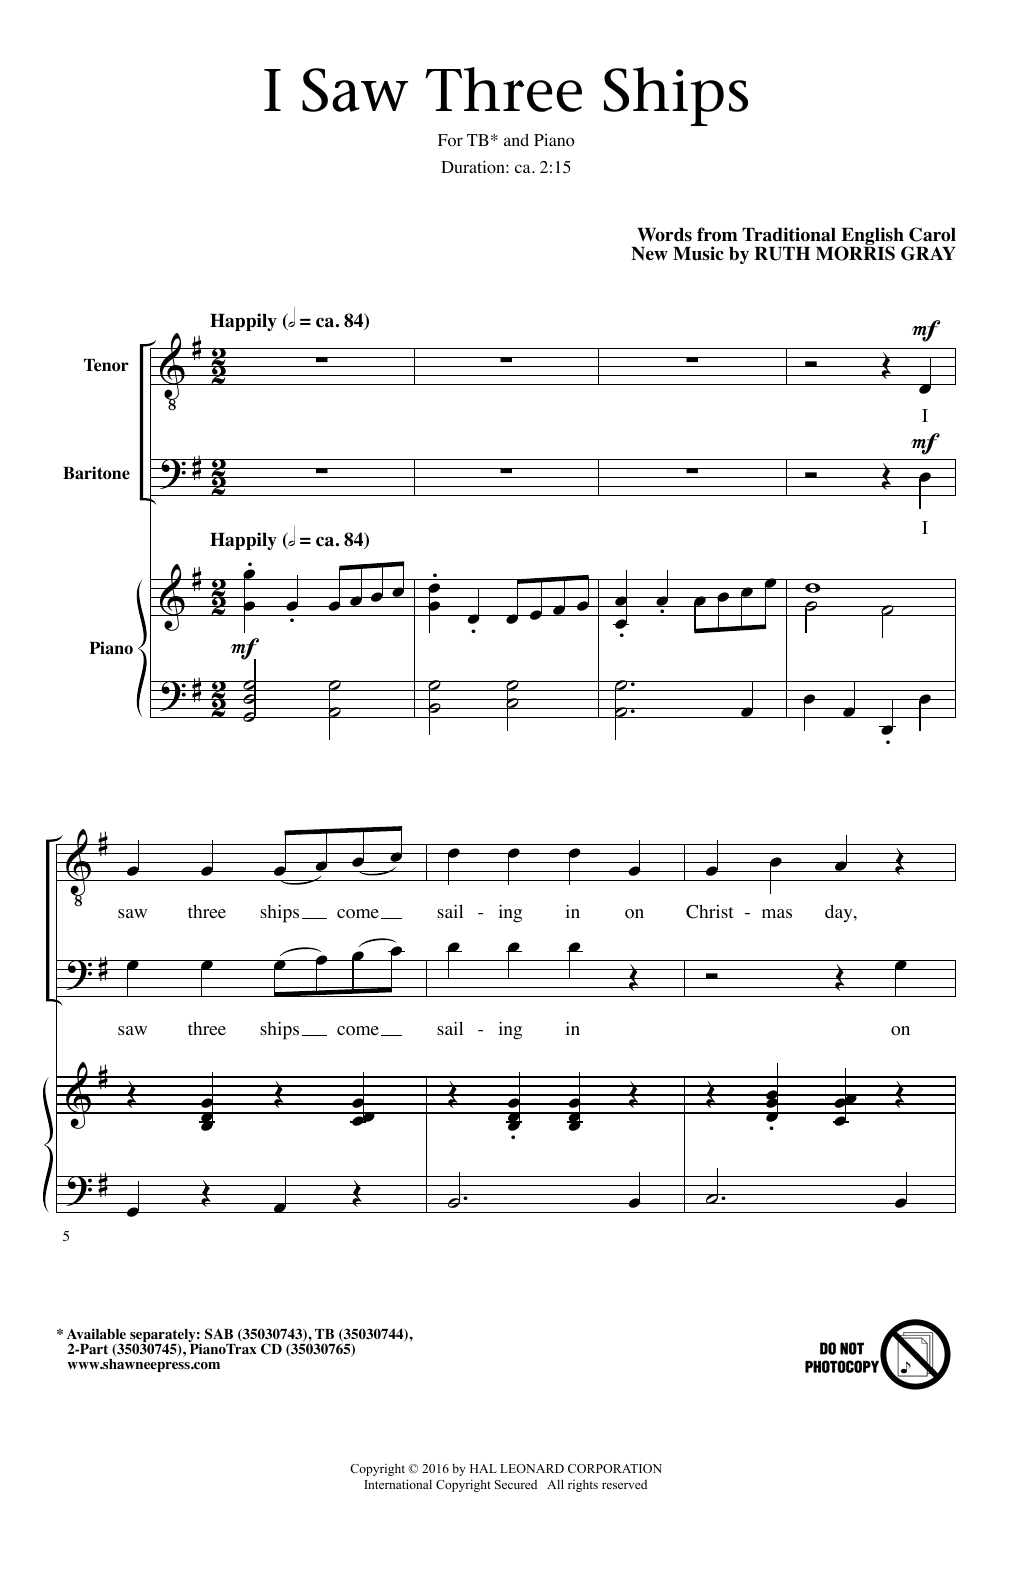 Ruth Morris Gray I Saw Three Ships Sheet Music Notes & Chords for 2-Part Choir - Download or Print PDF